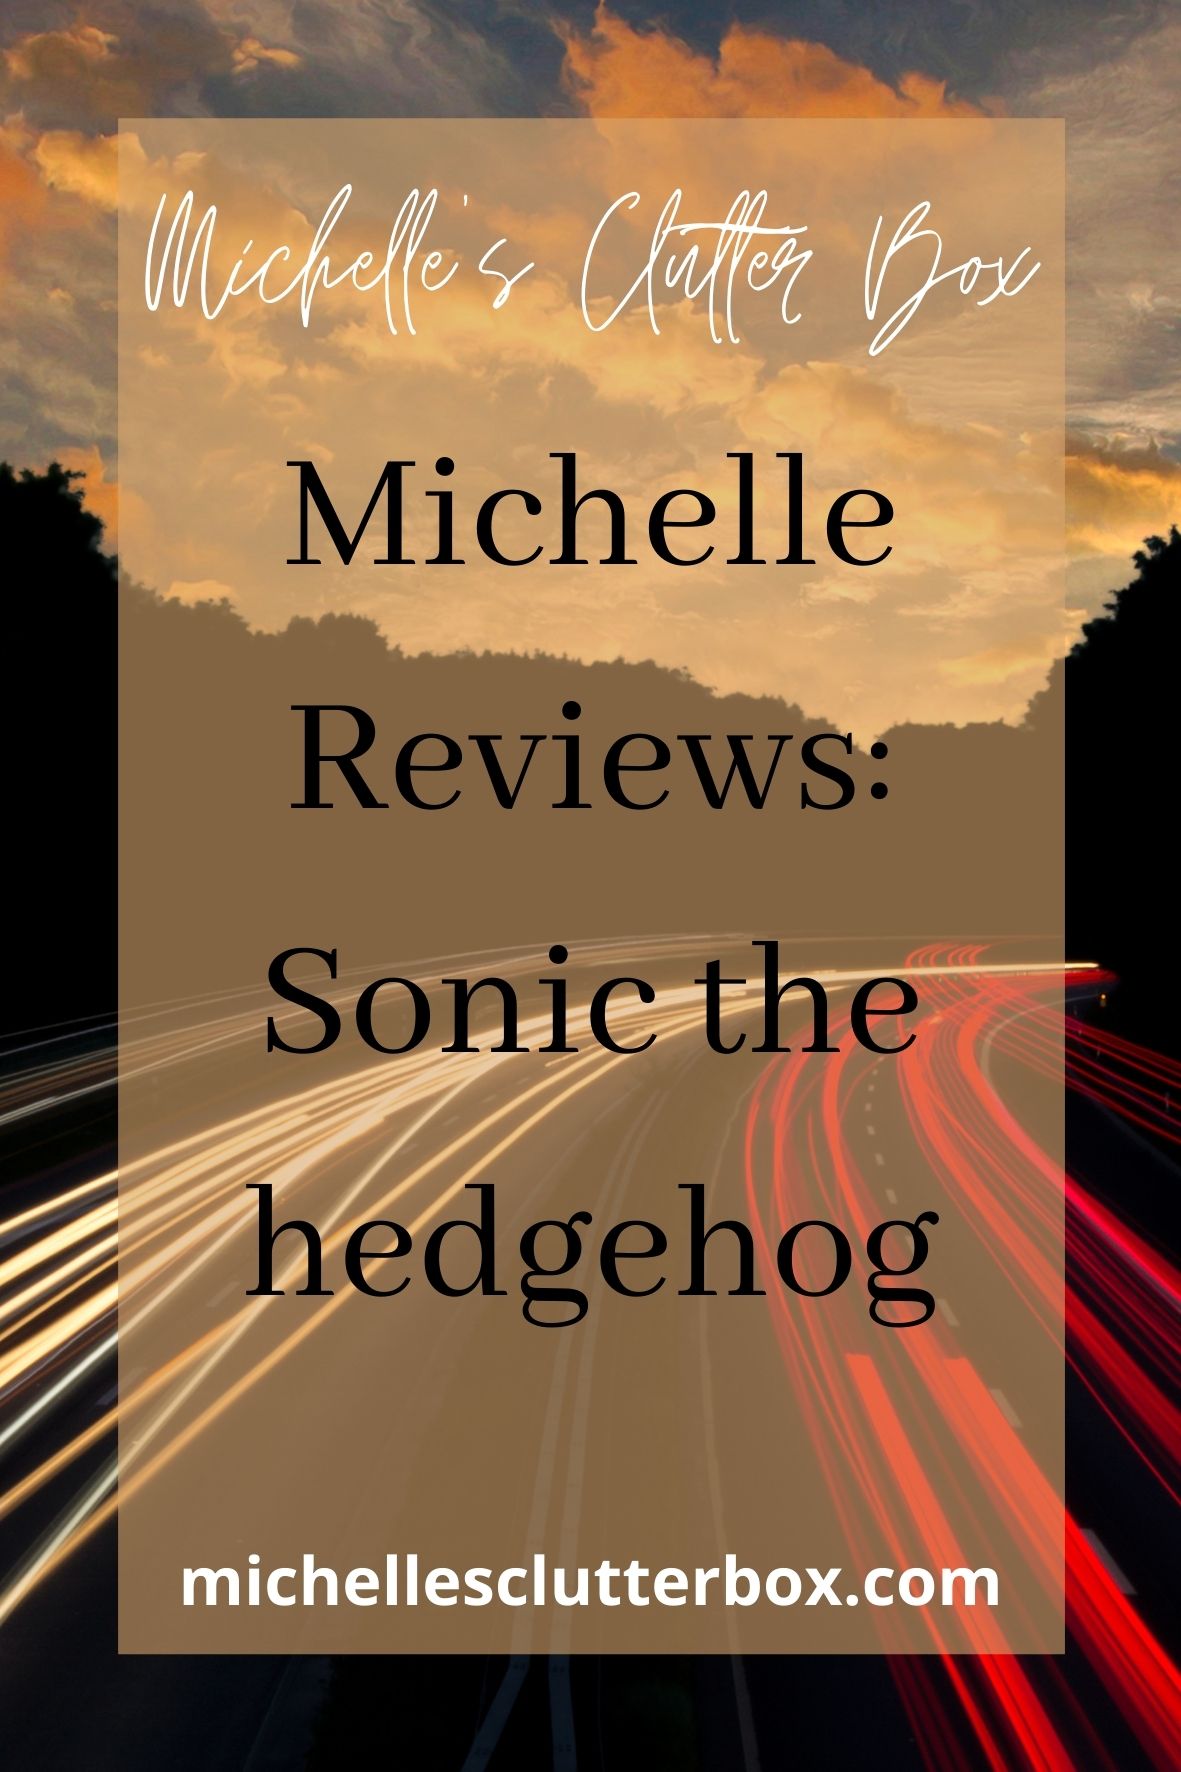 Sonic the hedgehog